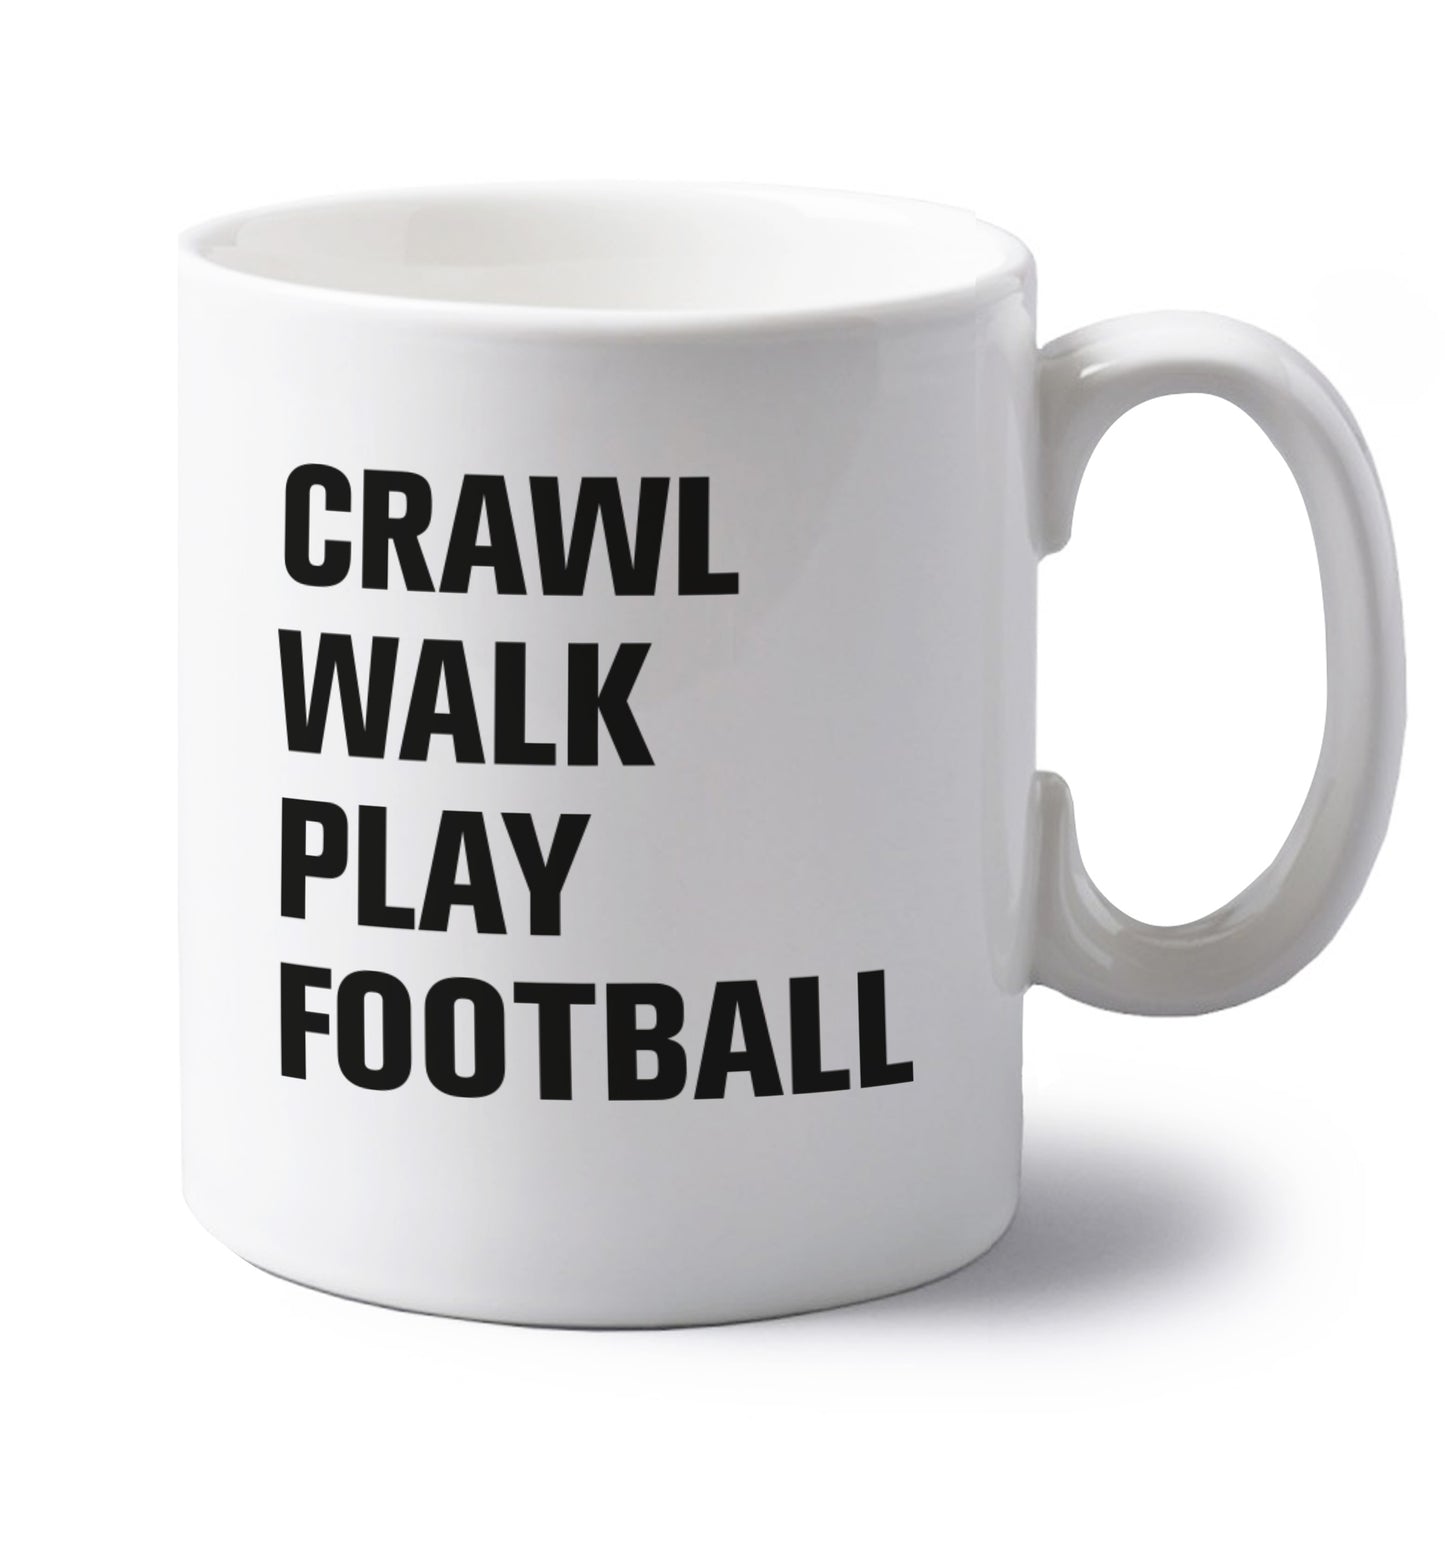 Crawl, walk, play football left handed white ceramic mug 